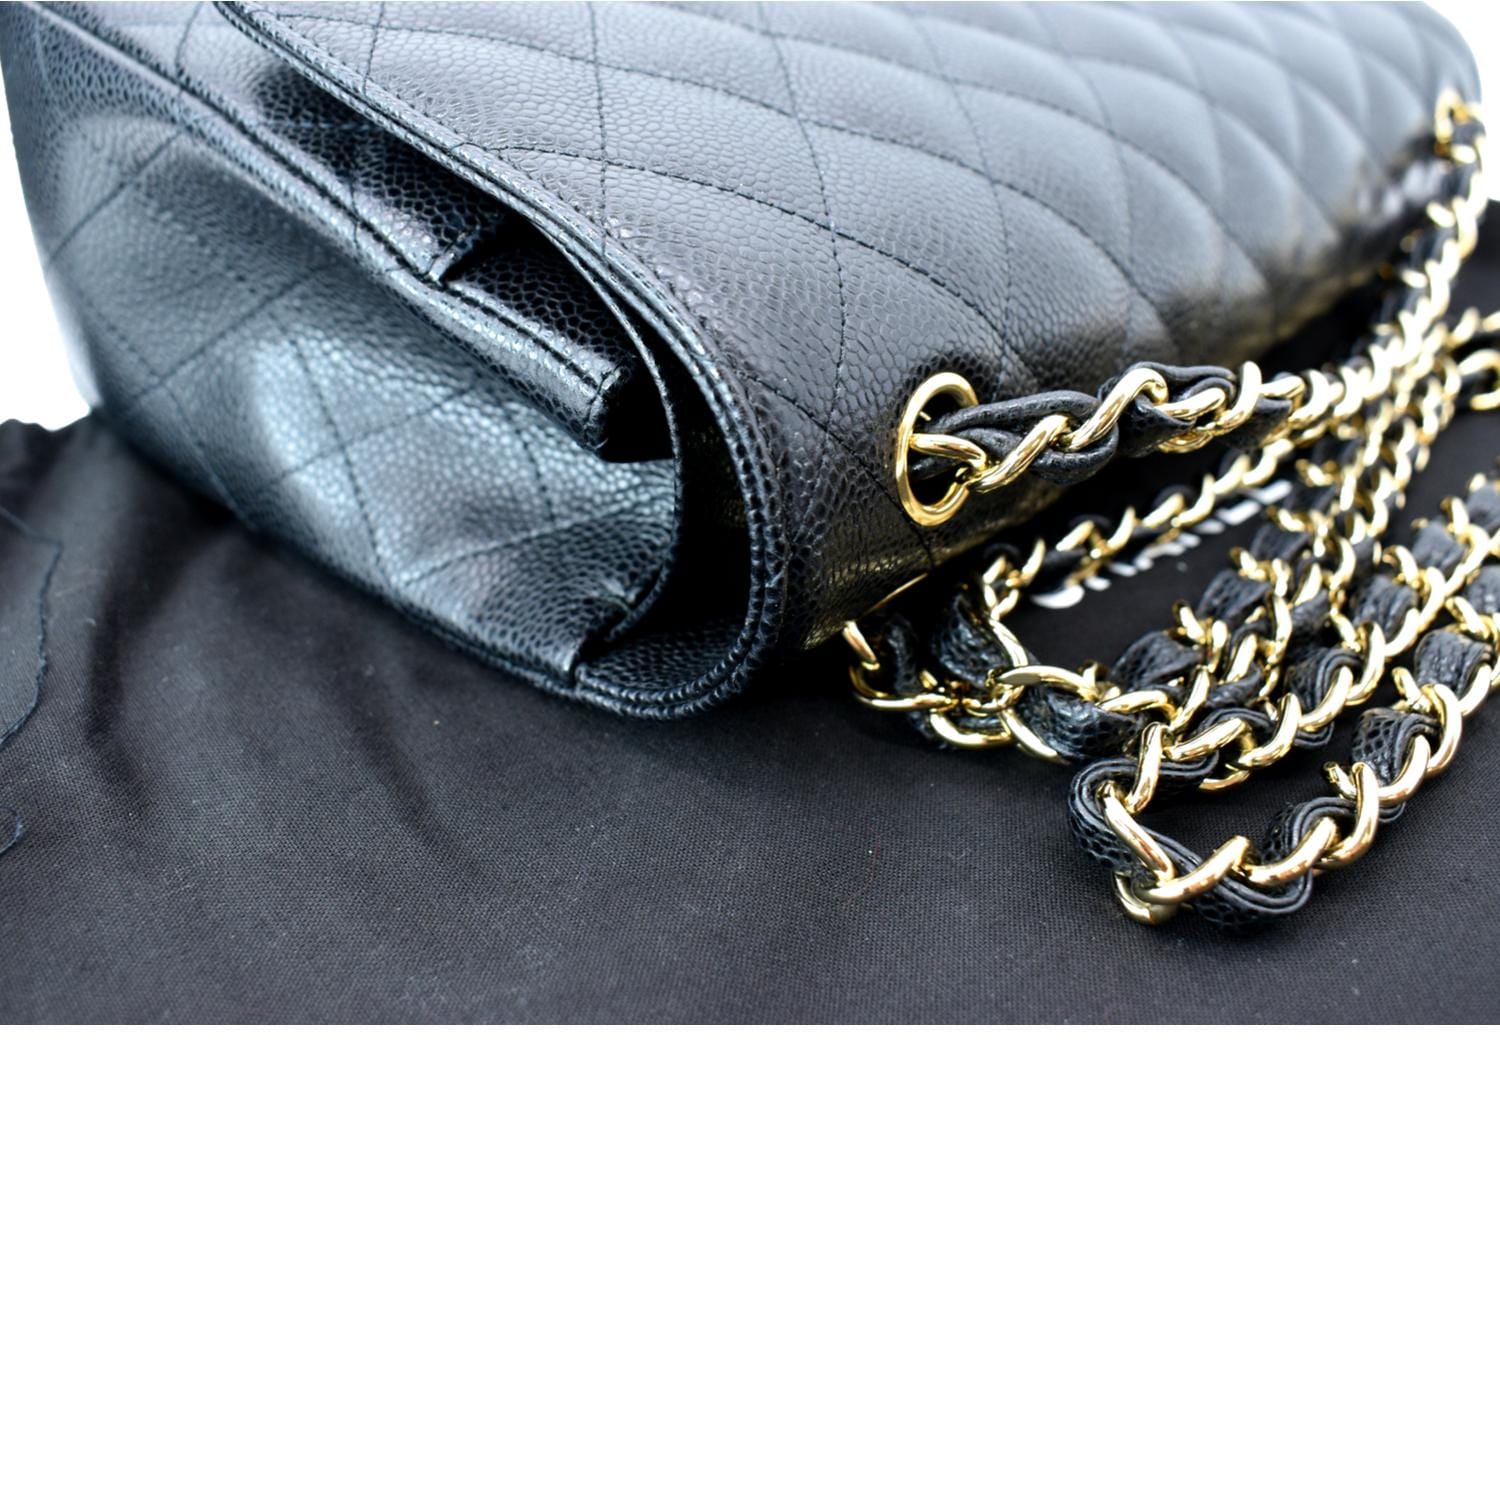 CHANEL Classic Jumbo Double Flap Caviar Leather Shoulder Bag Black